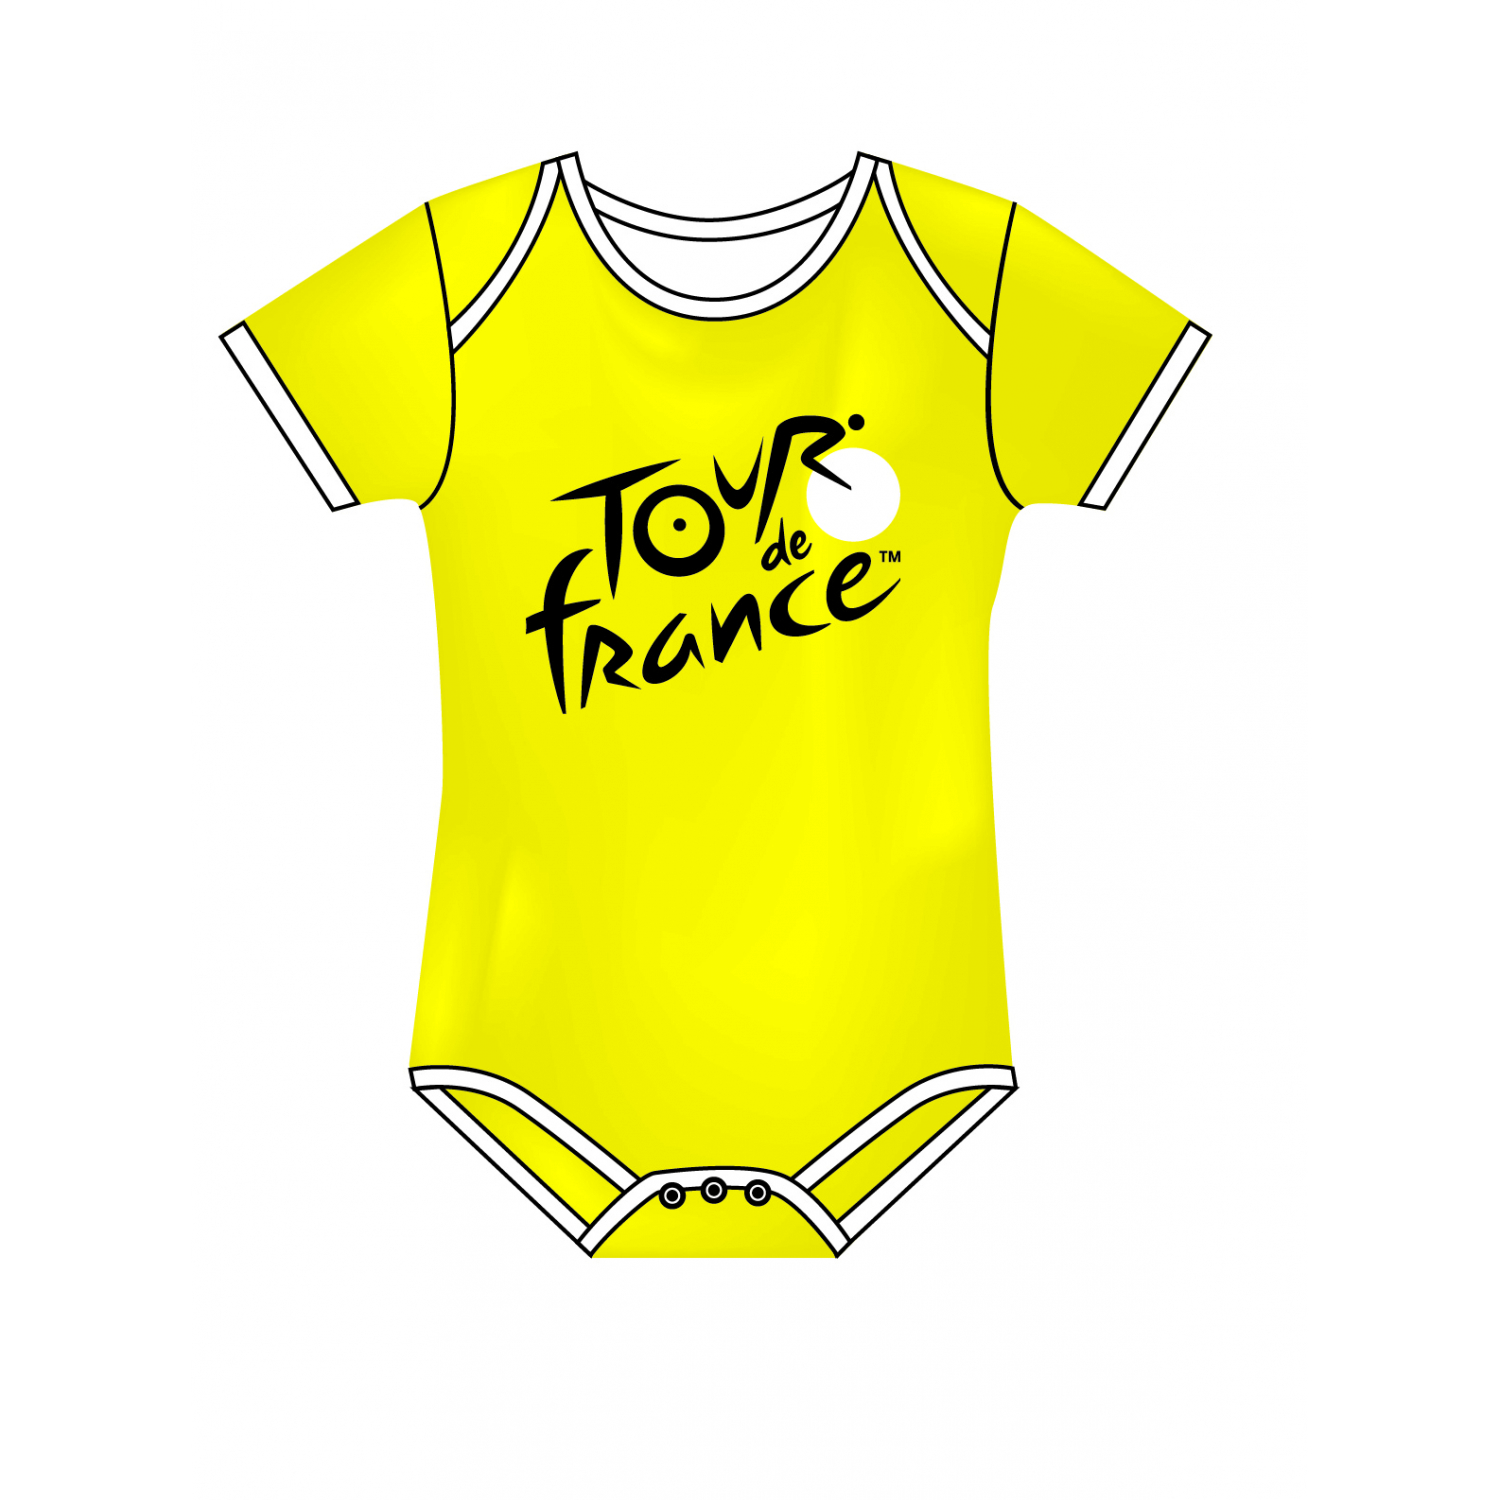 Tour de France Yellow Body Baby